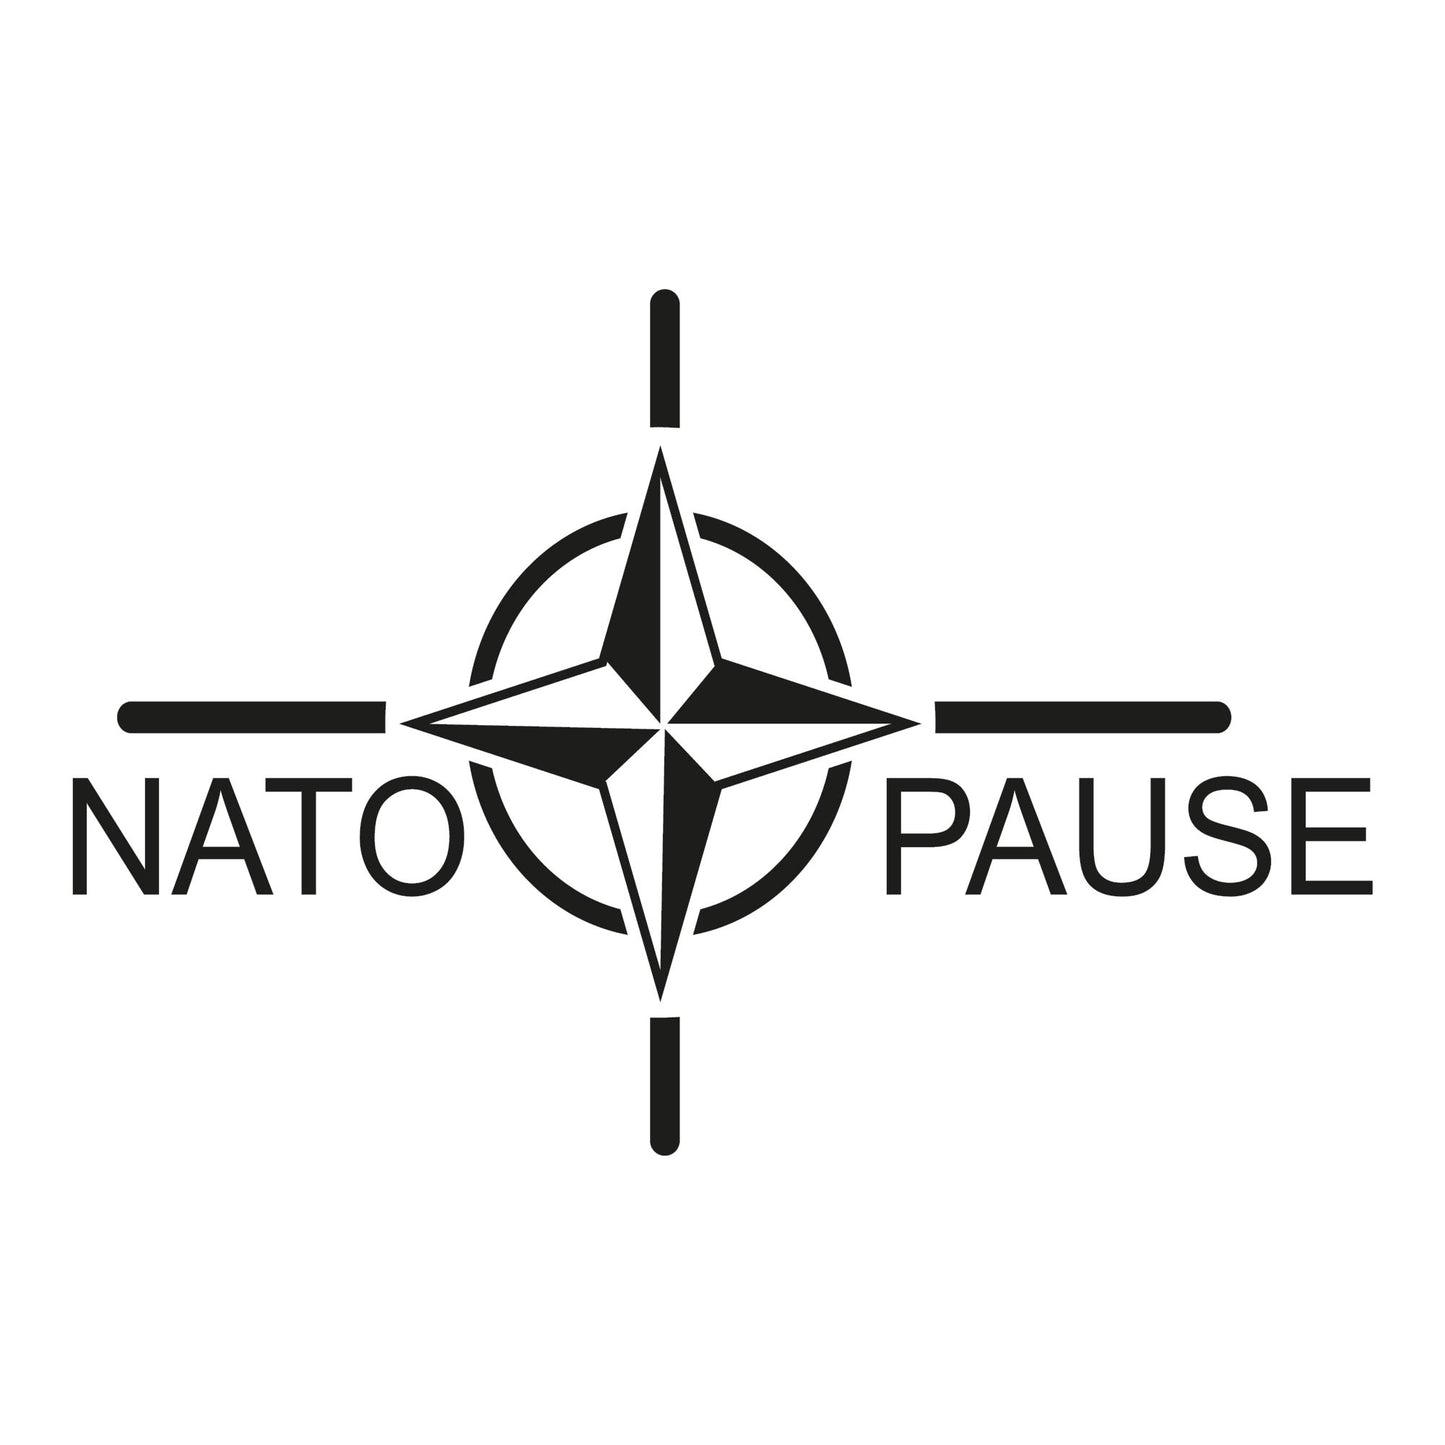 Autoaufkleber - Nato pause - Nato break - 150x100 mm